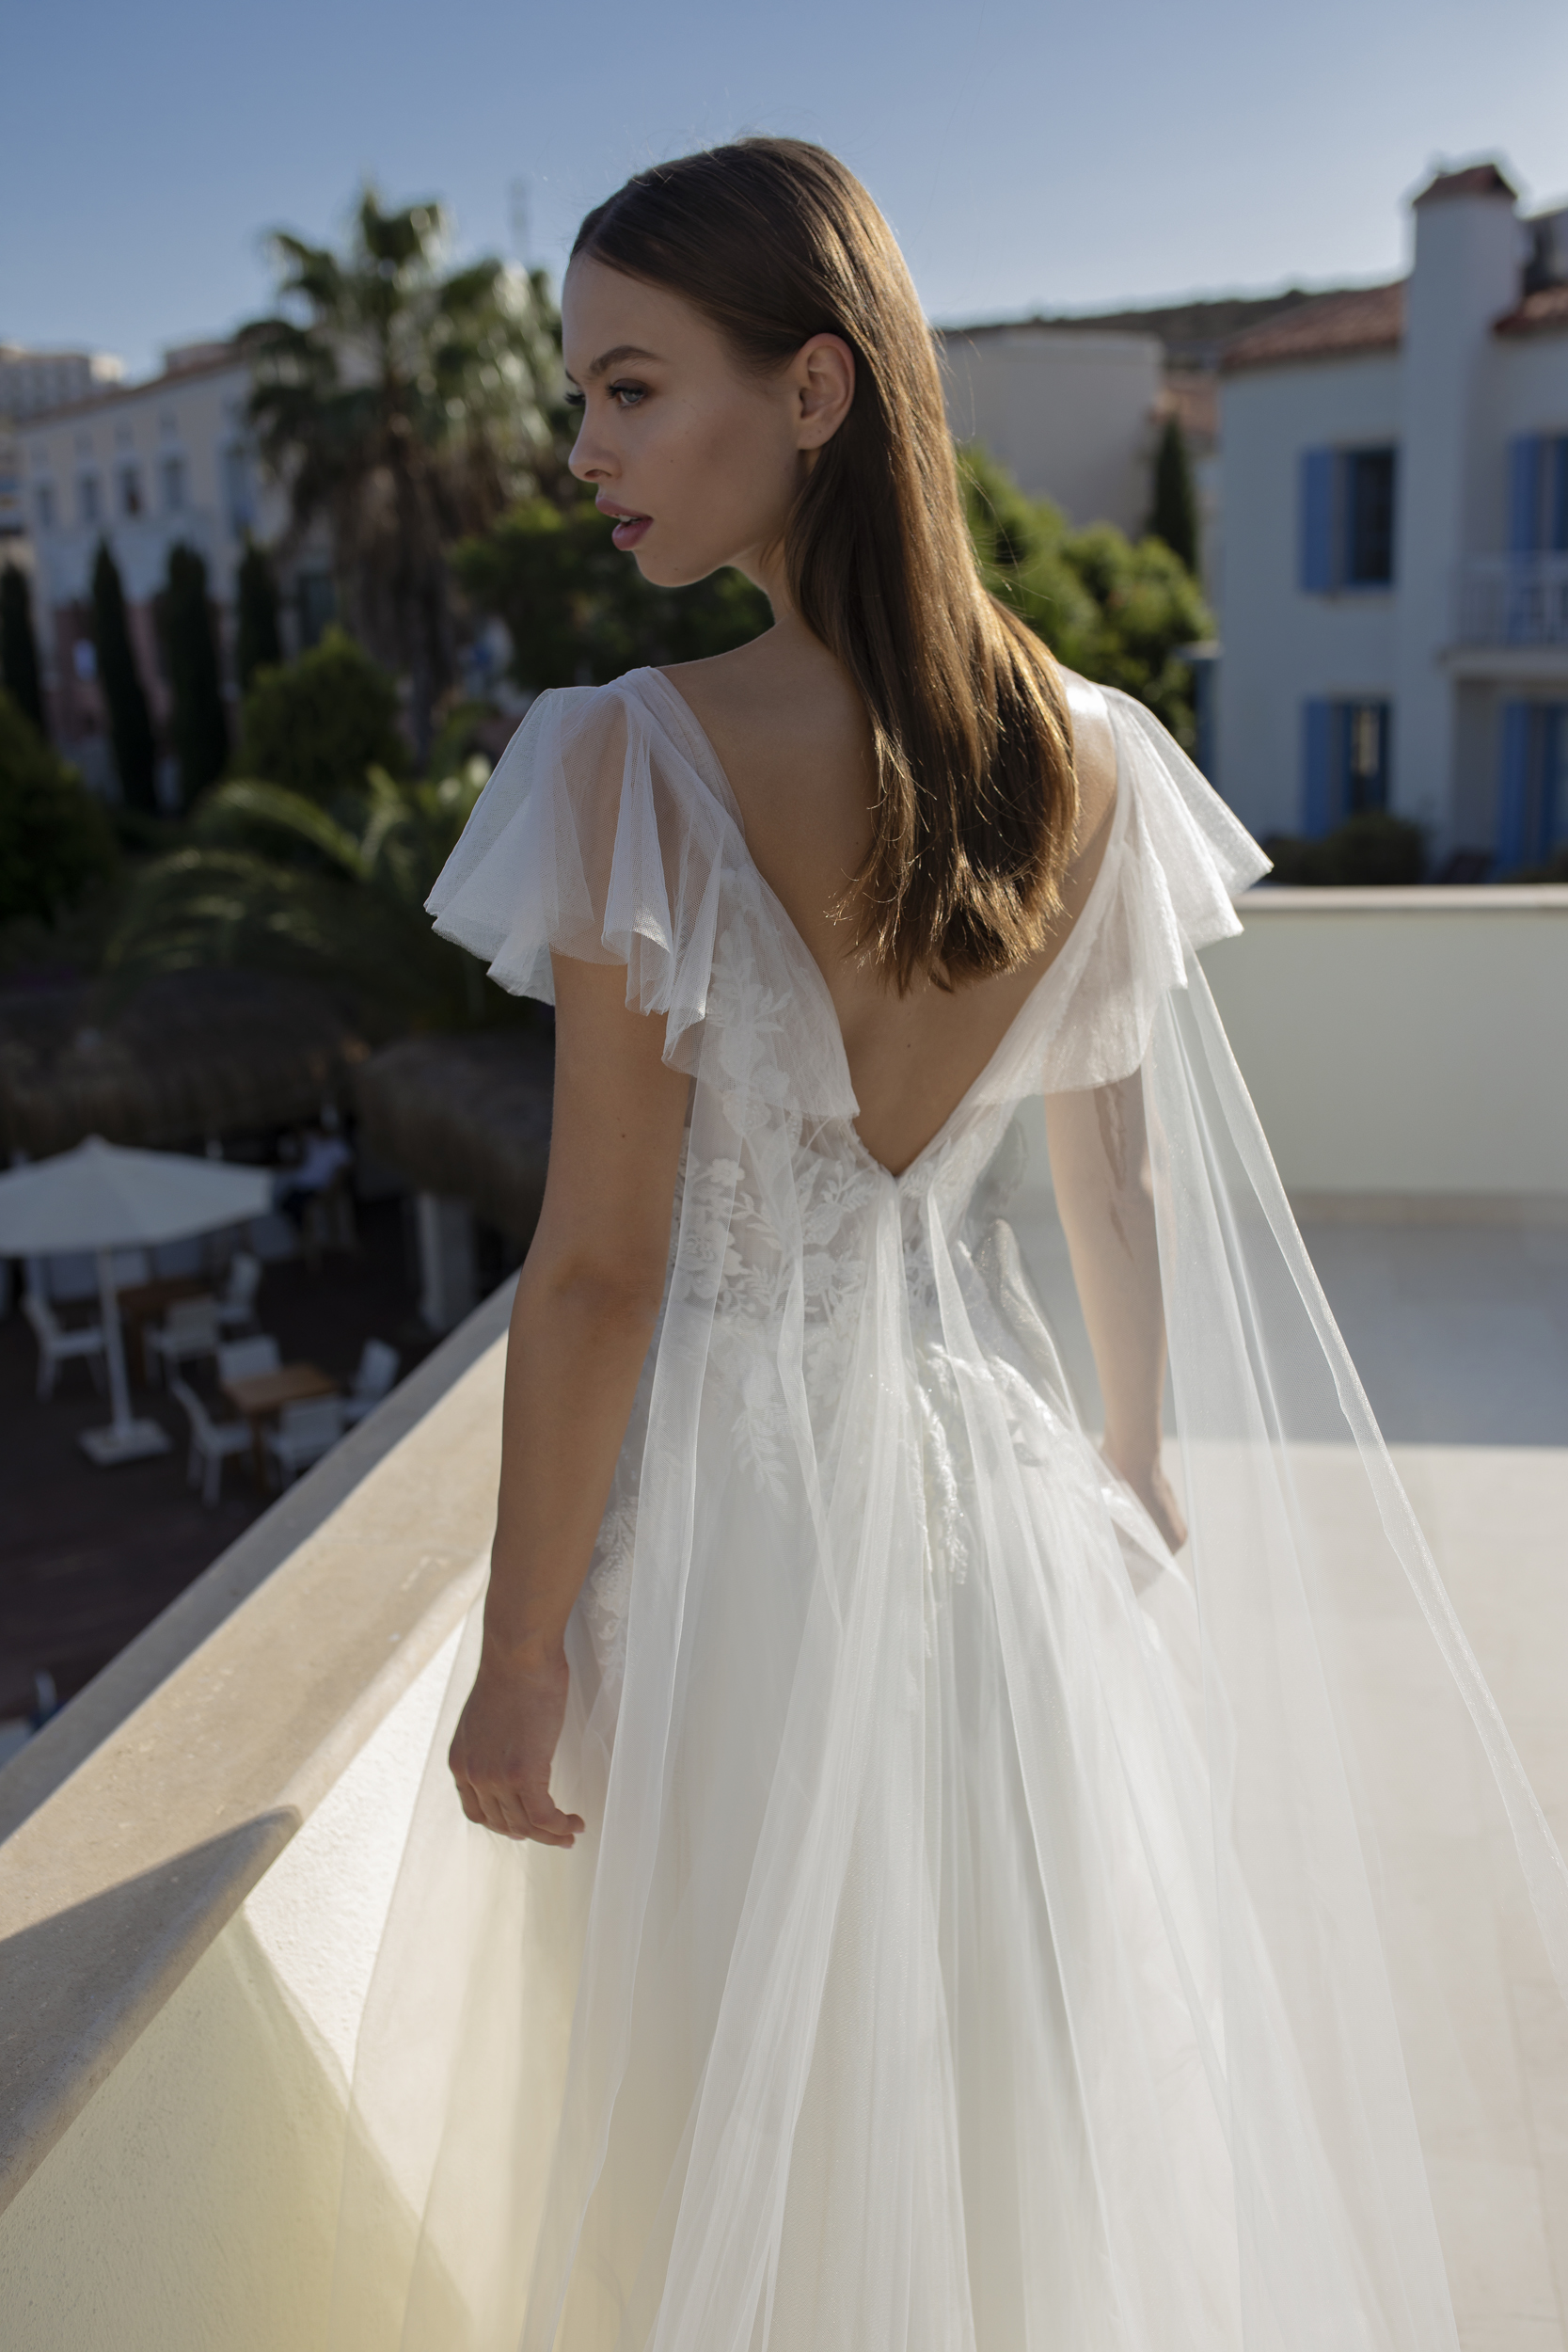 Olda wedding dress by Modeca